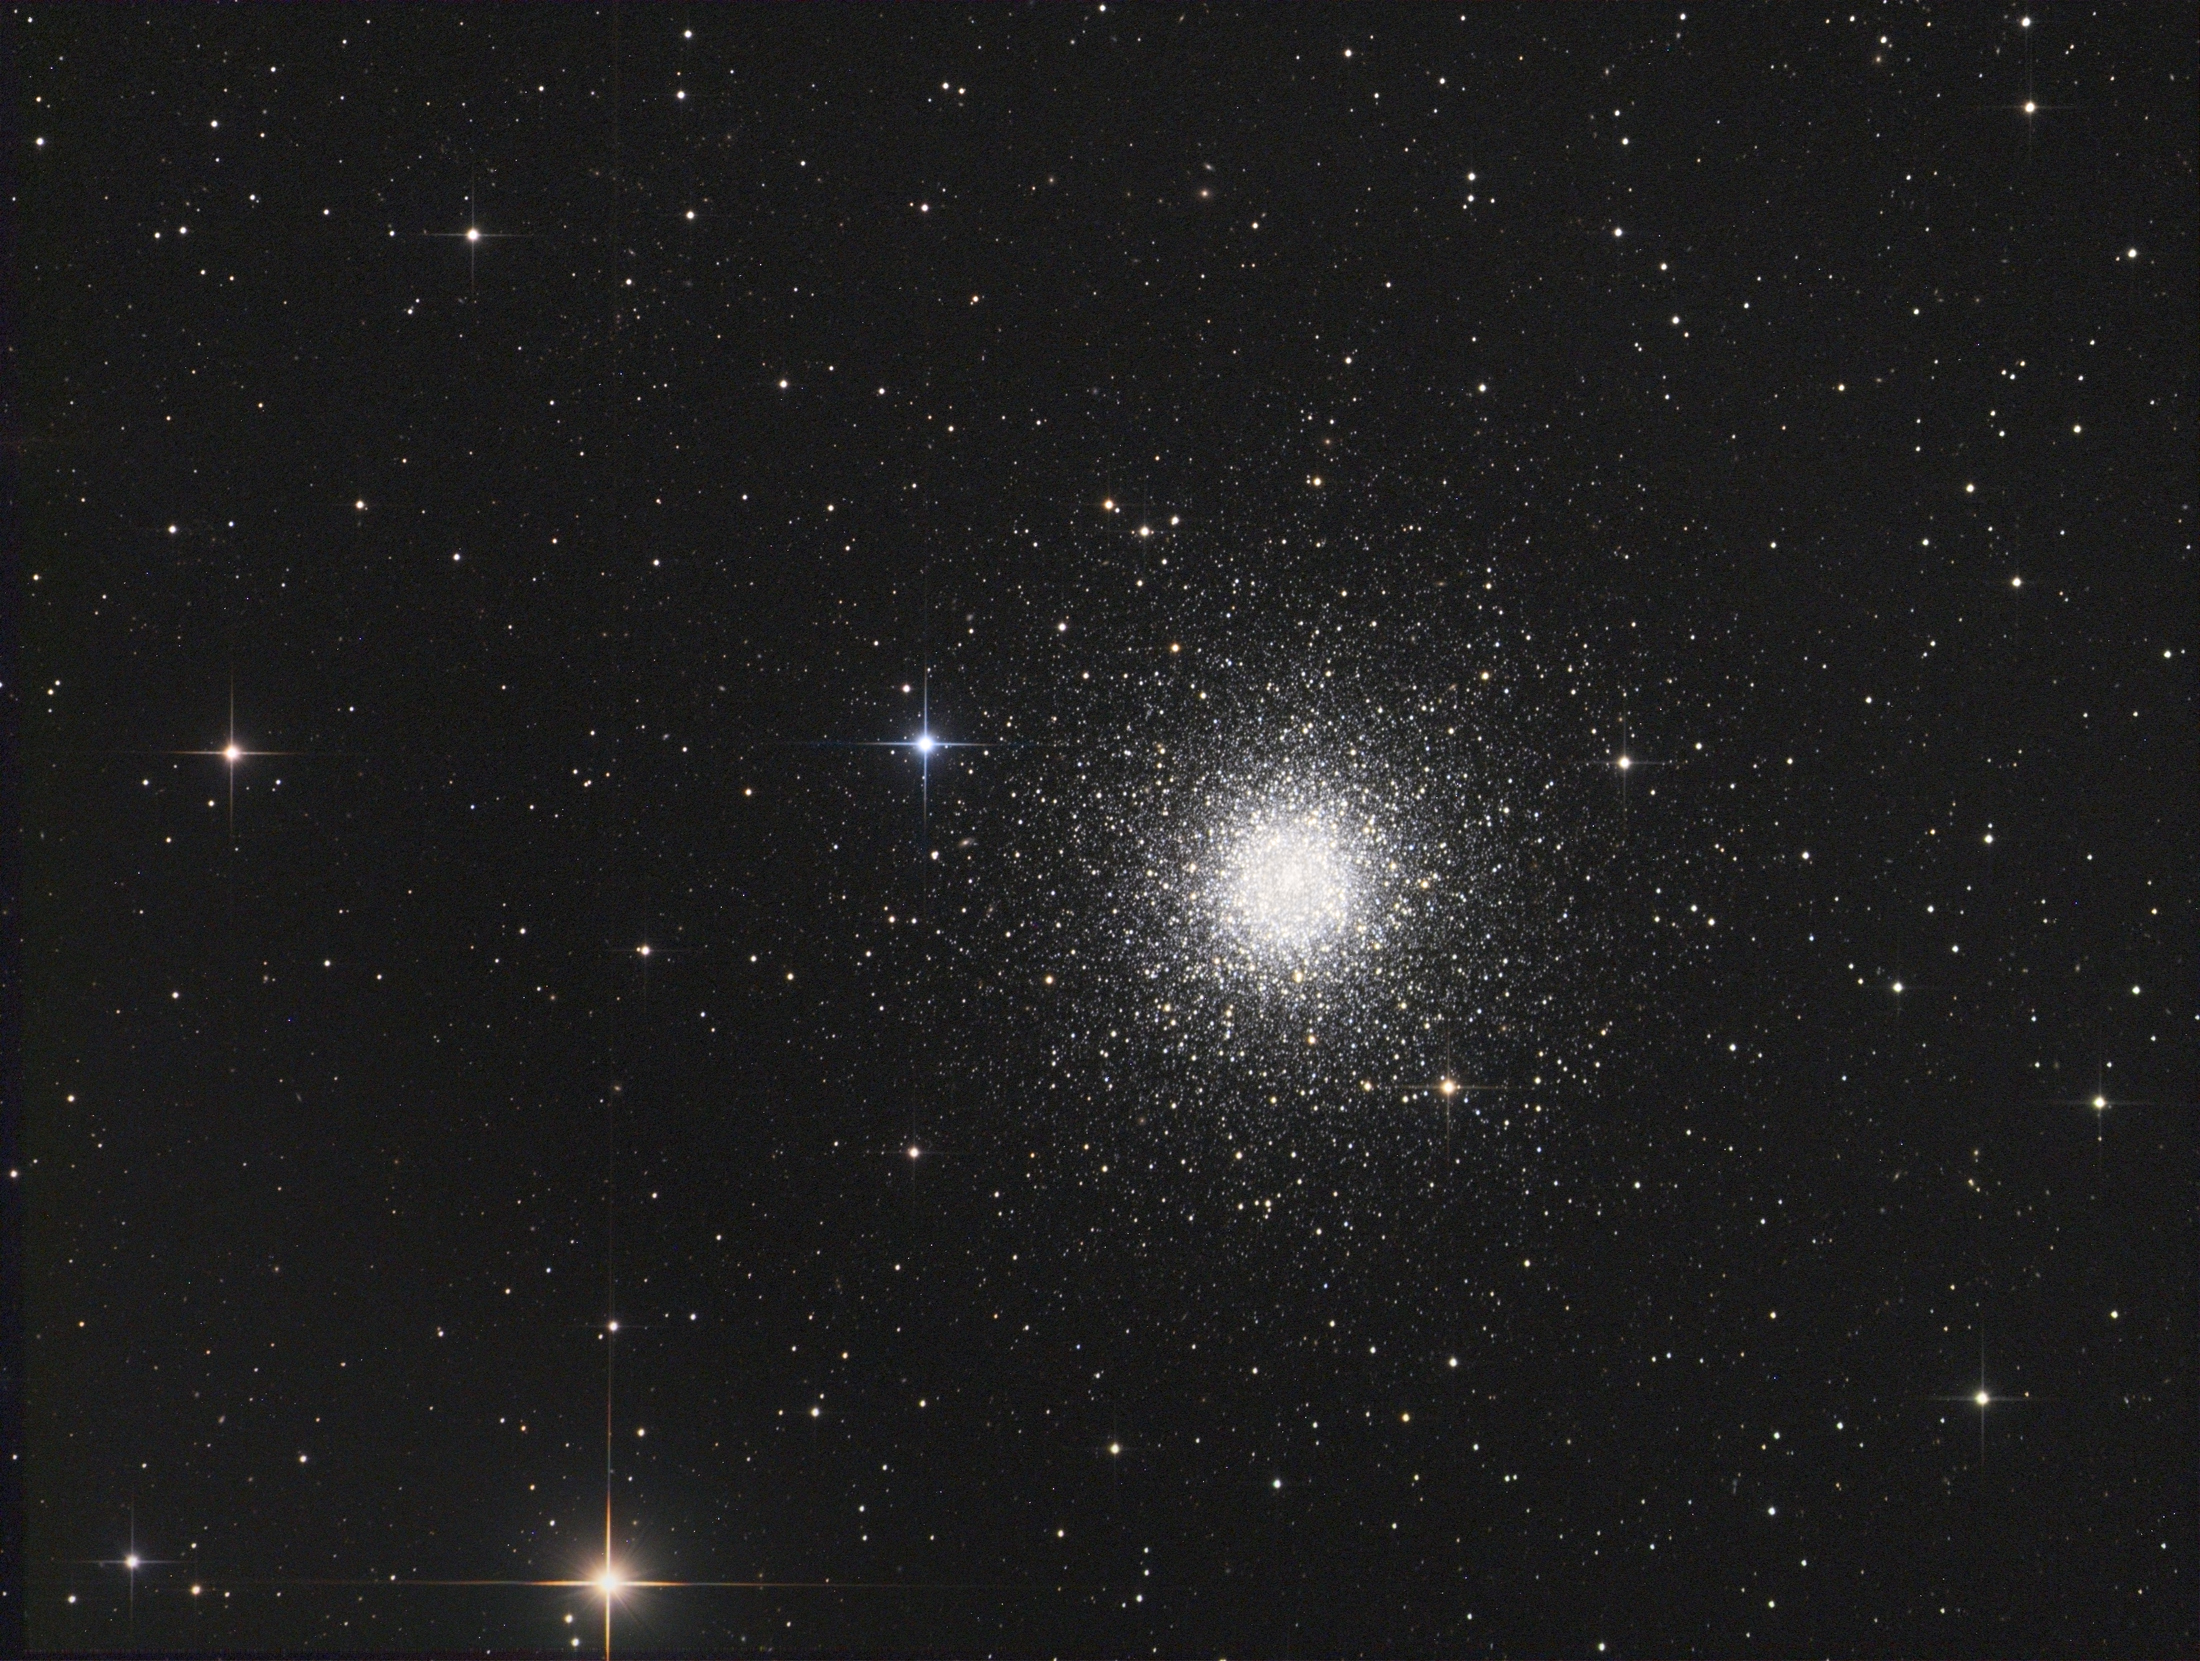 Globular Cluster M3